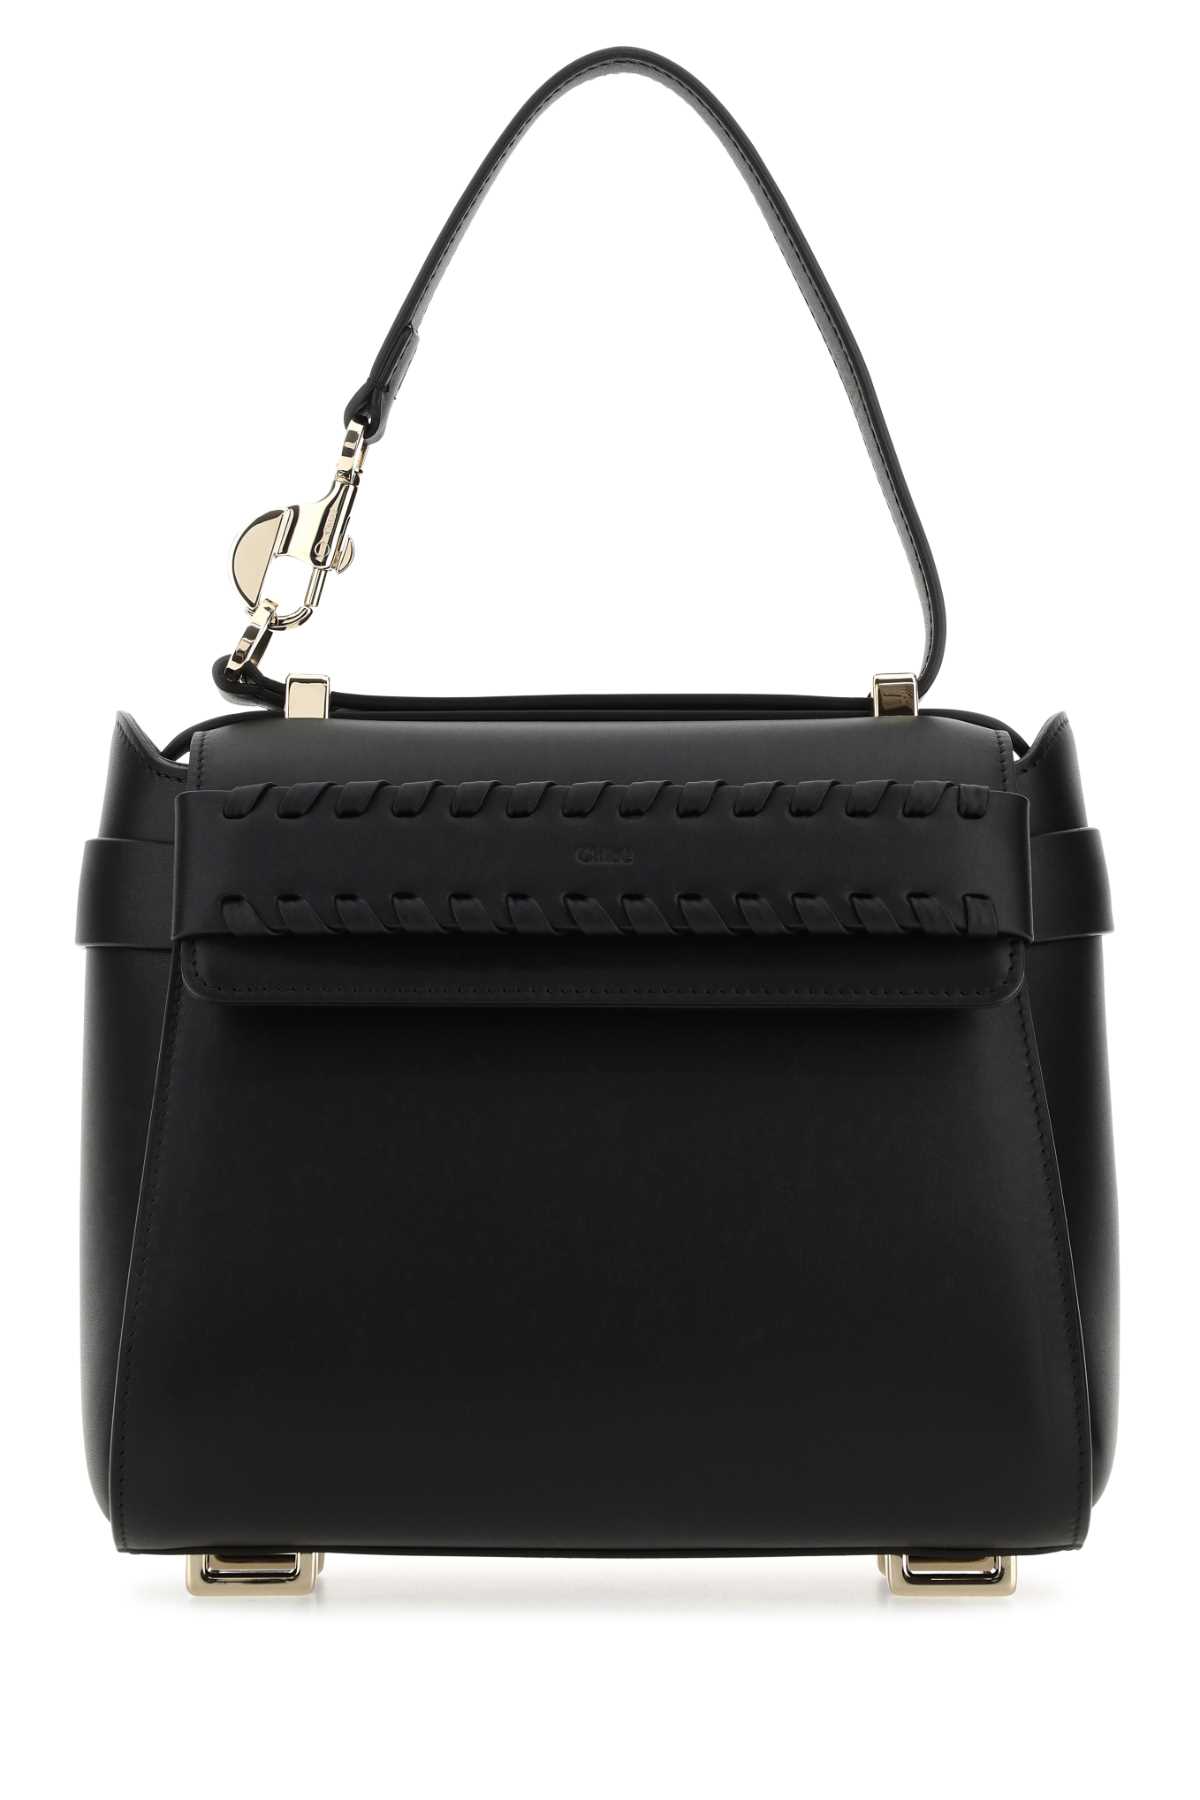 Chloé Black Leather Small Nacha Handbag